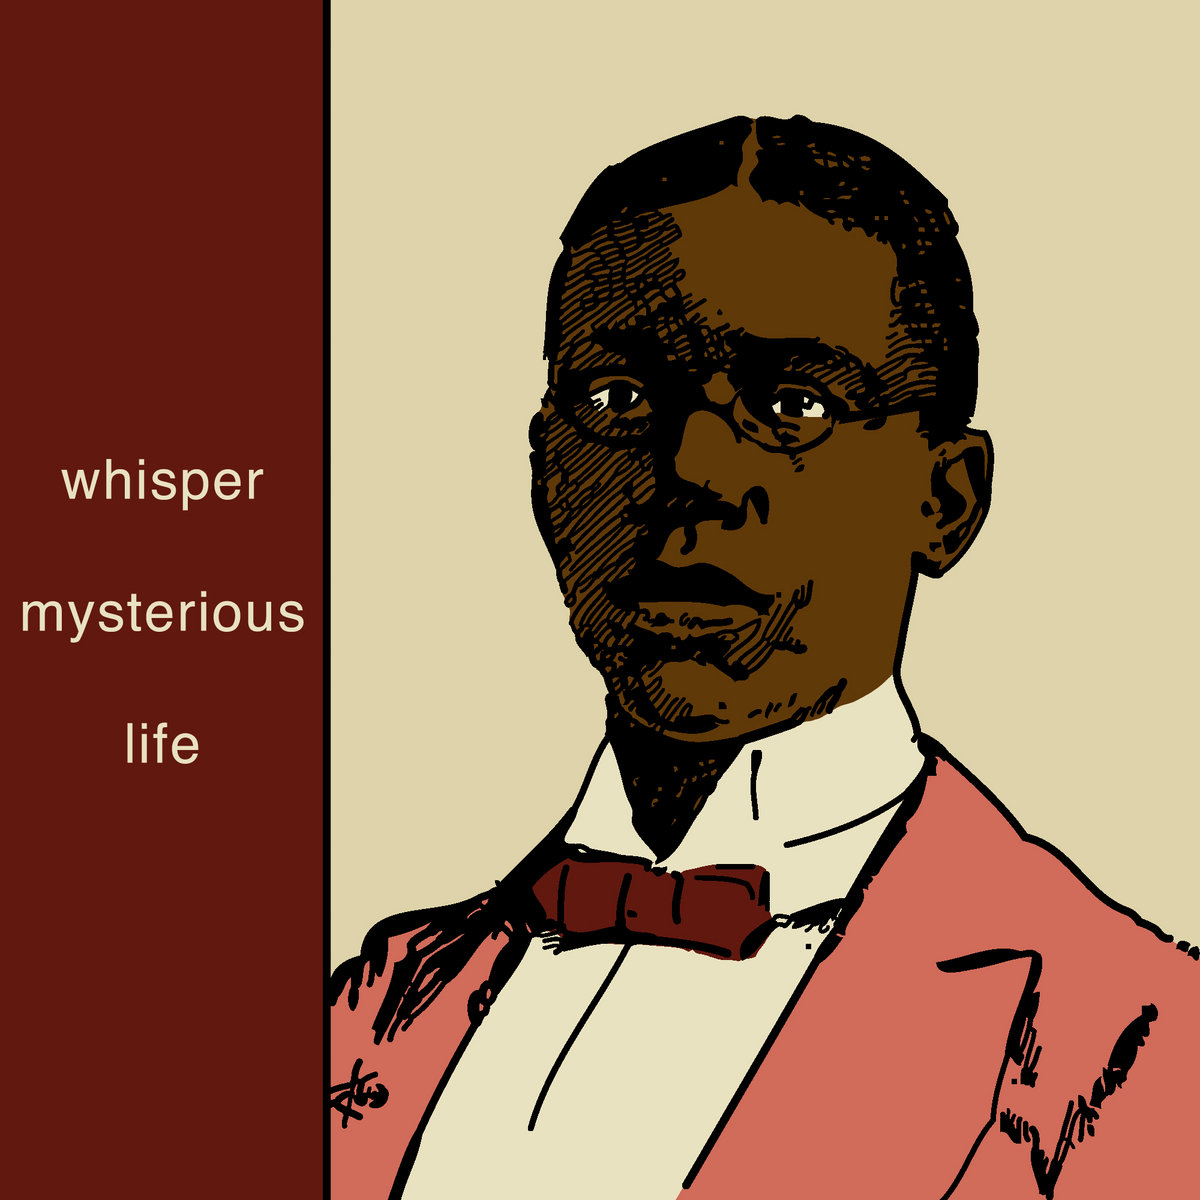 whisper mysterious life